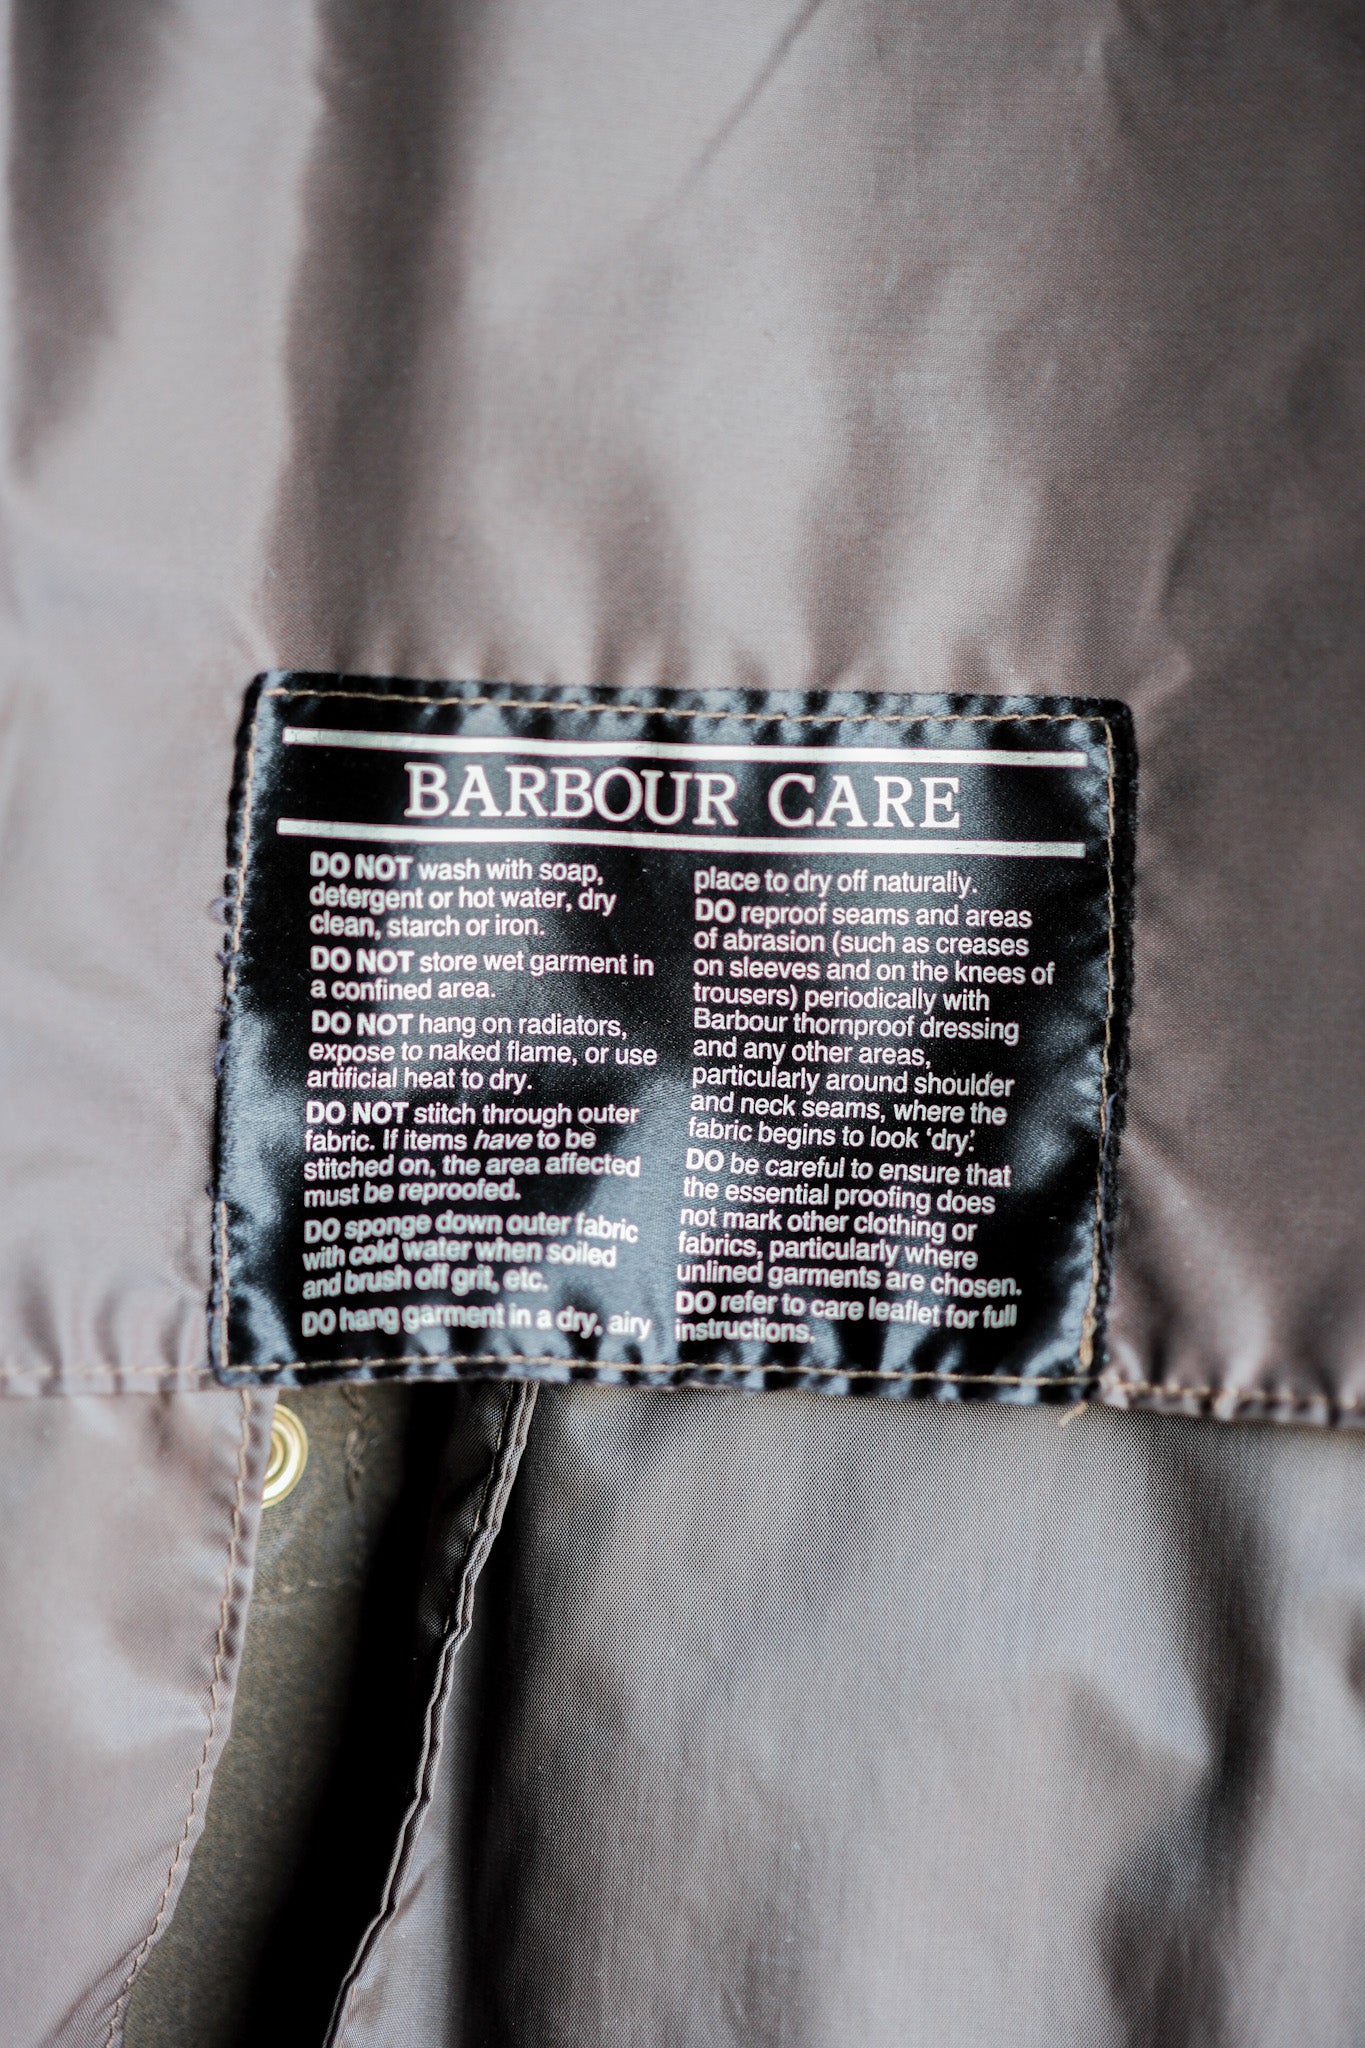 [~ 80's] Barbour vintage "3/4 Coat" 2 Crest